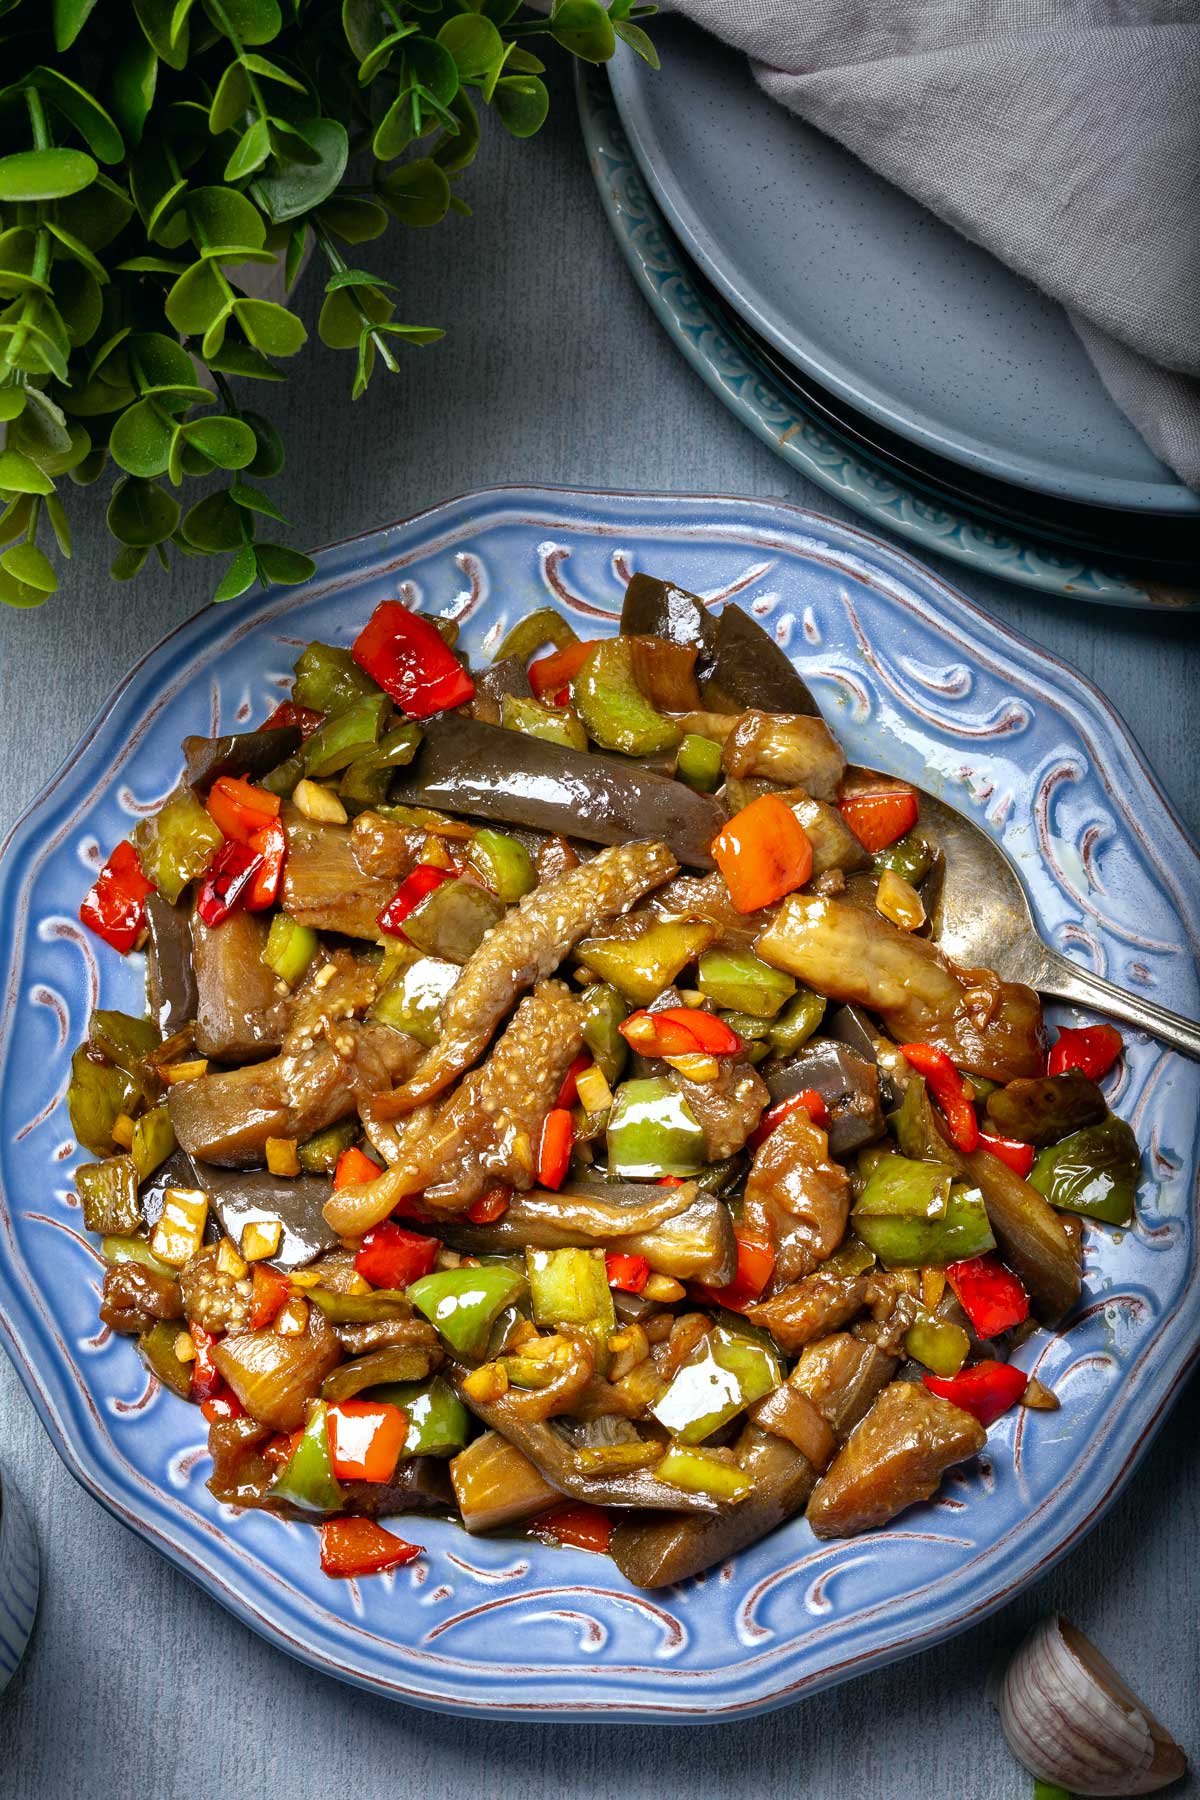 Chinese Eggplant stir fry